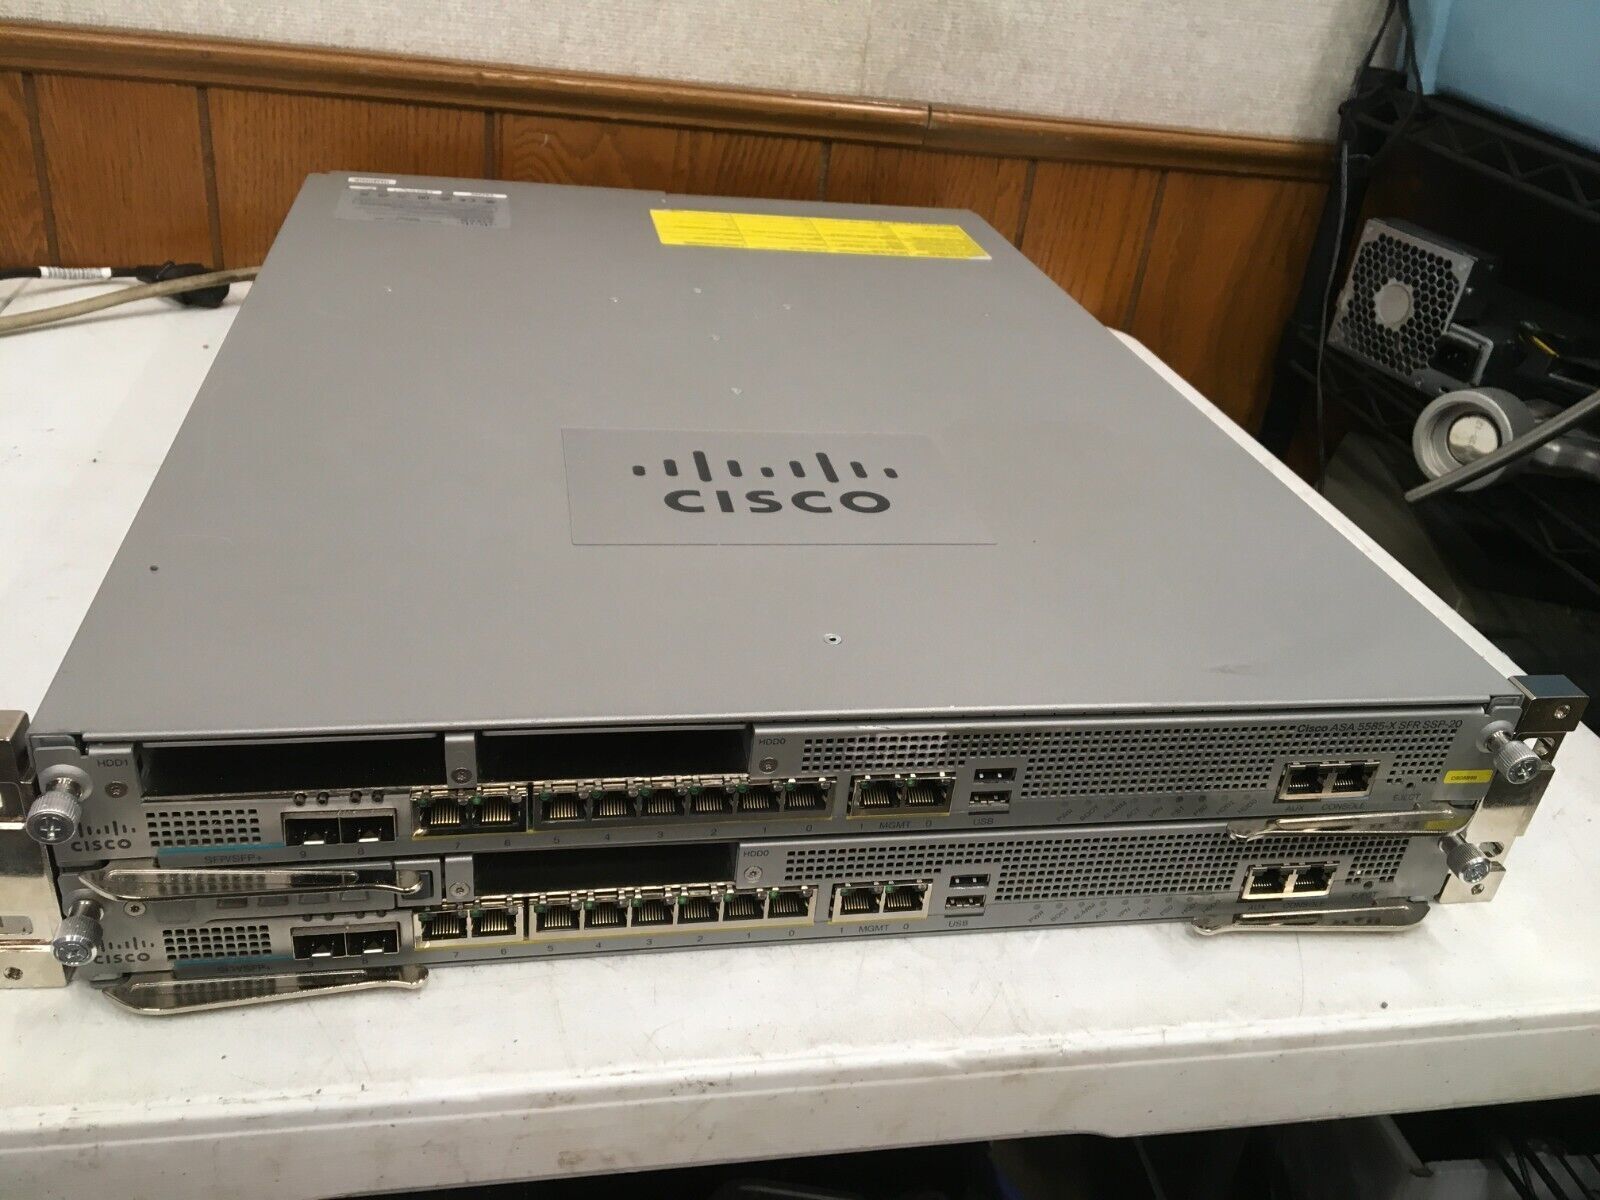 Cisco ASA 5585 ASA 5585-X SFR SSP-20 Adaptive Security Appliance with Dual 1200W